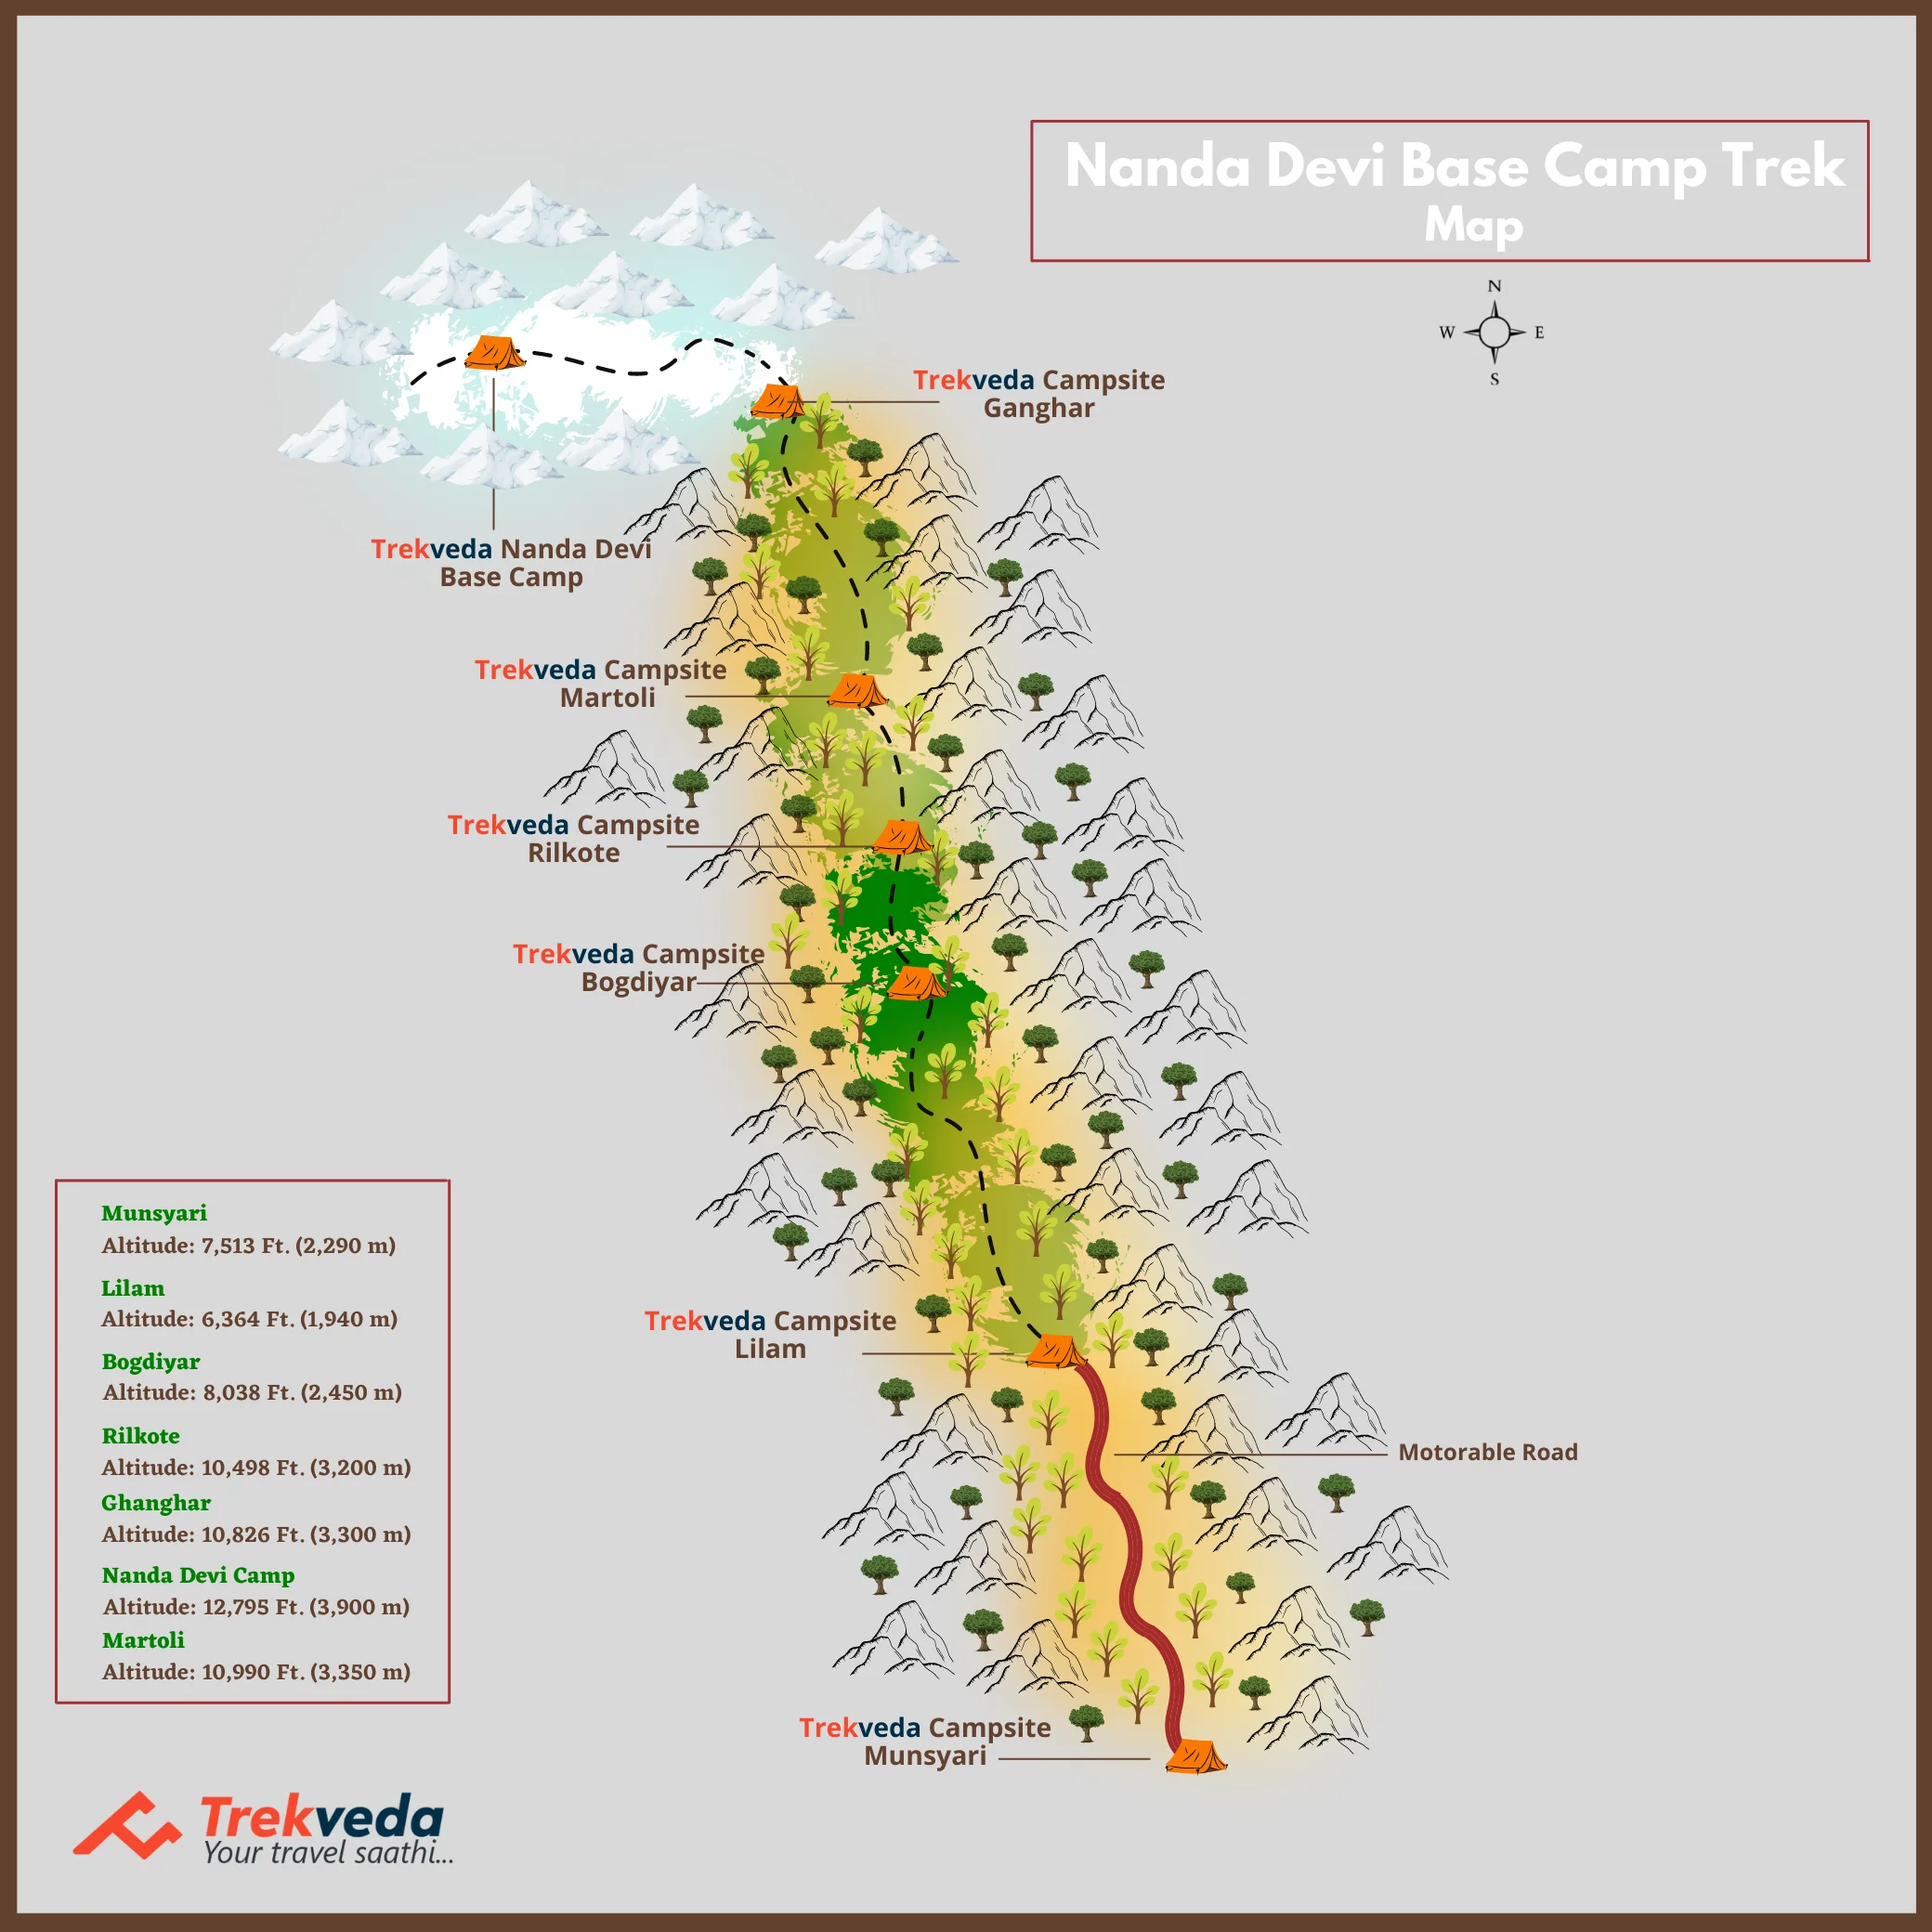 Nanda Devi Base Camp Trek Map